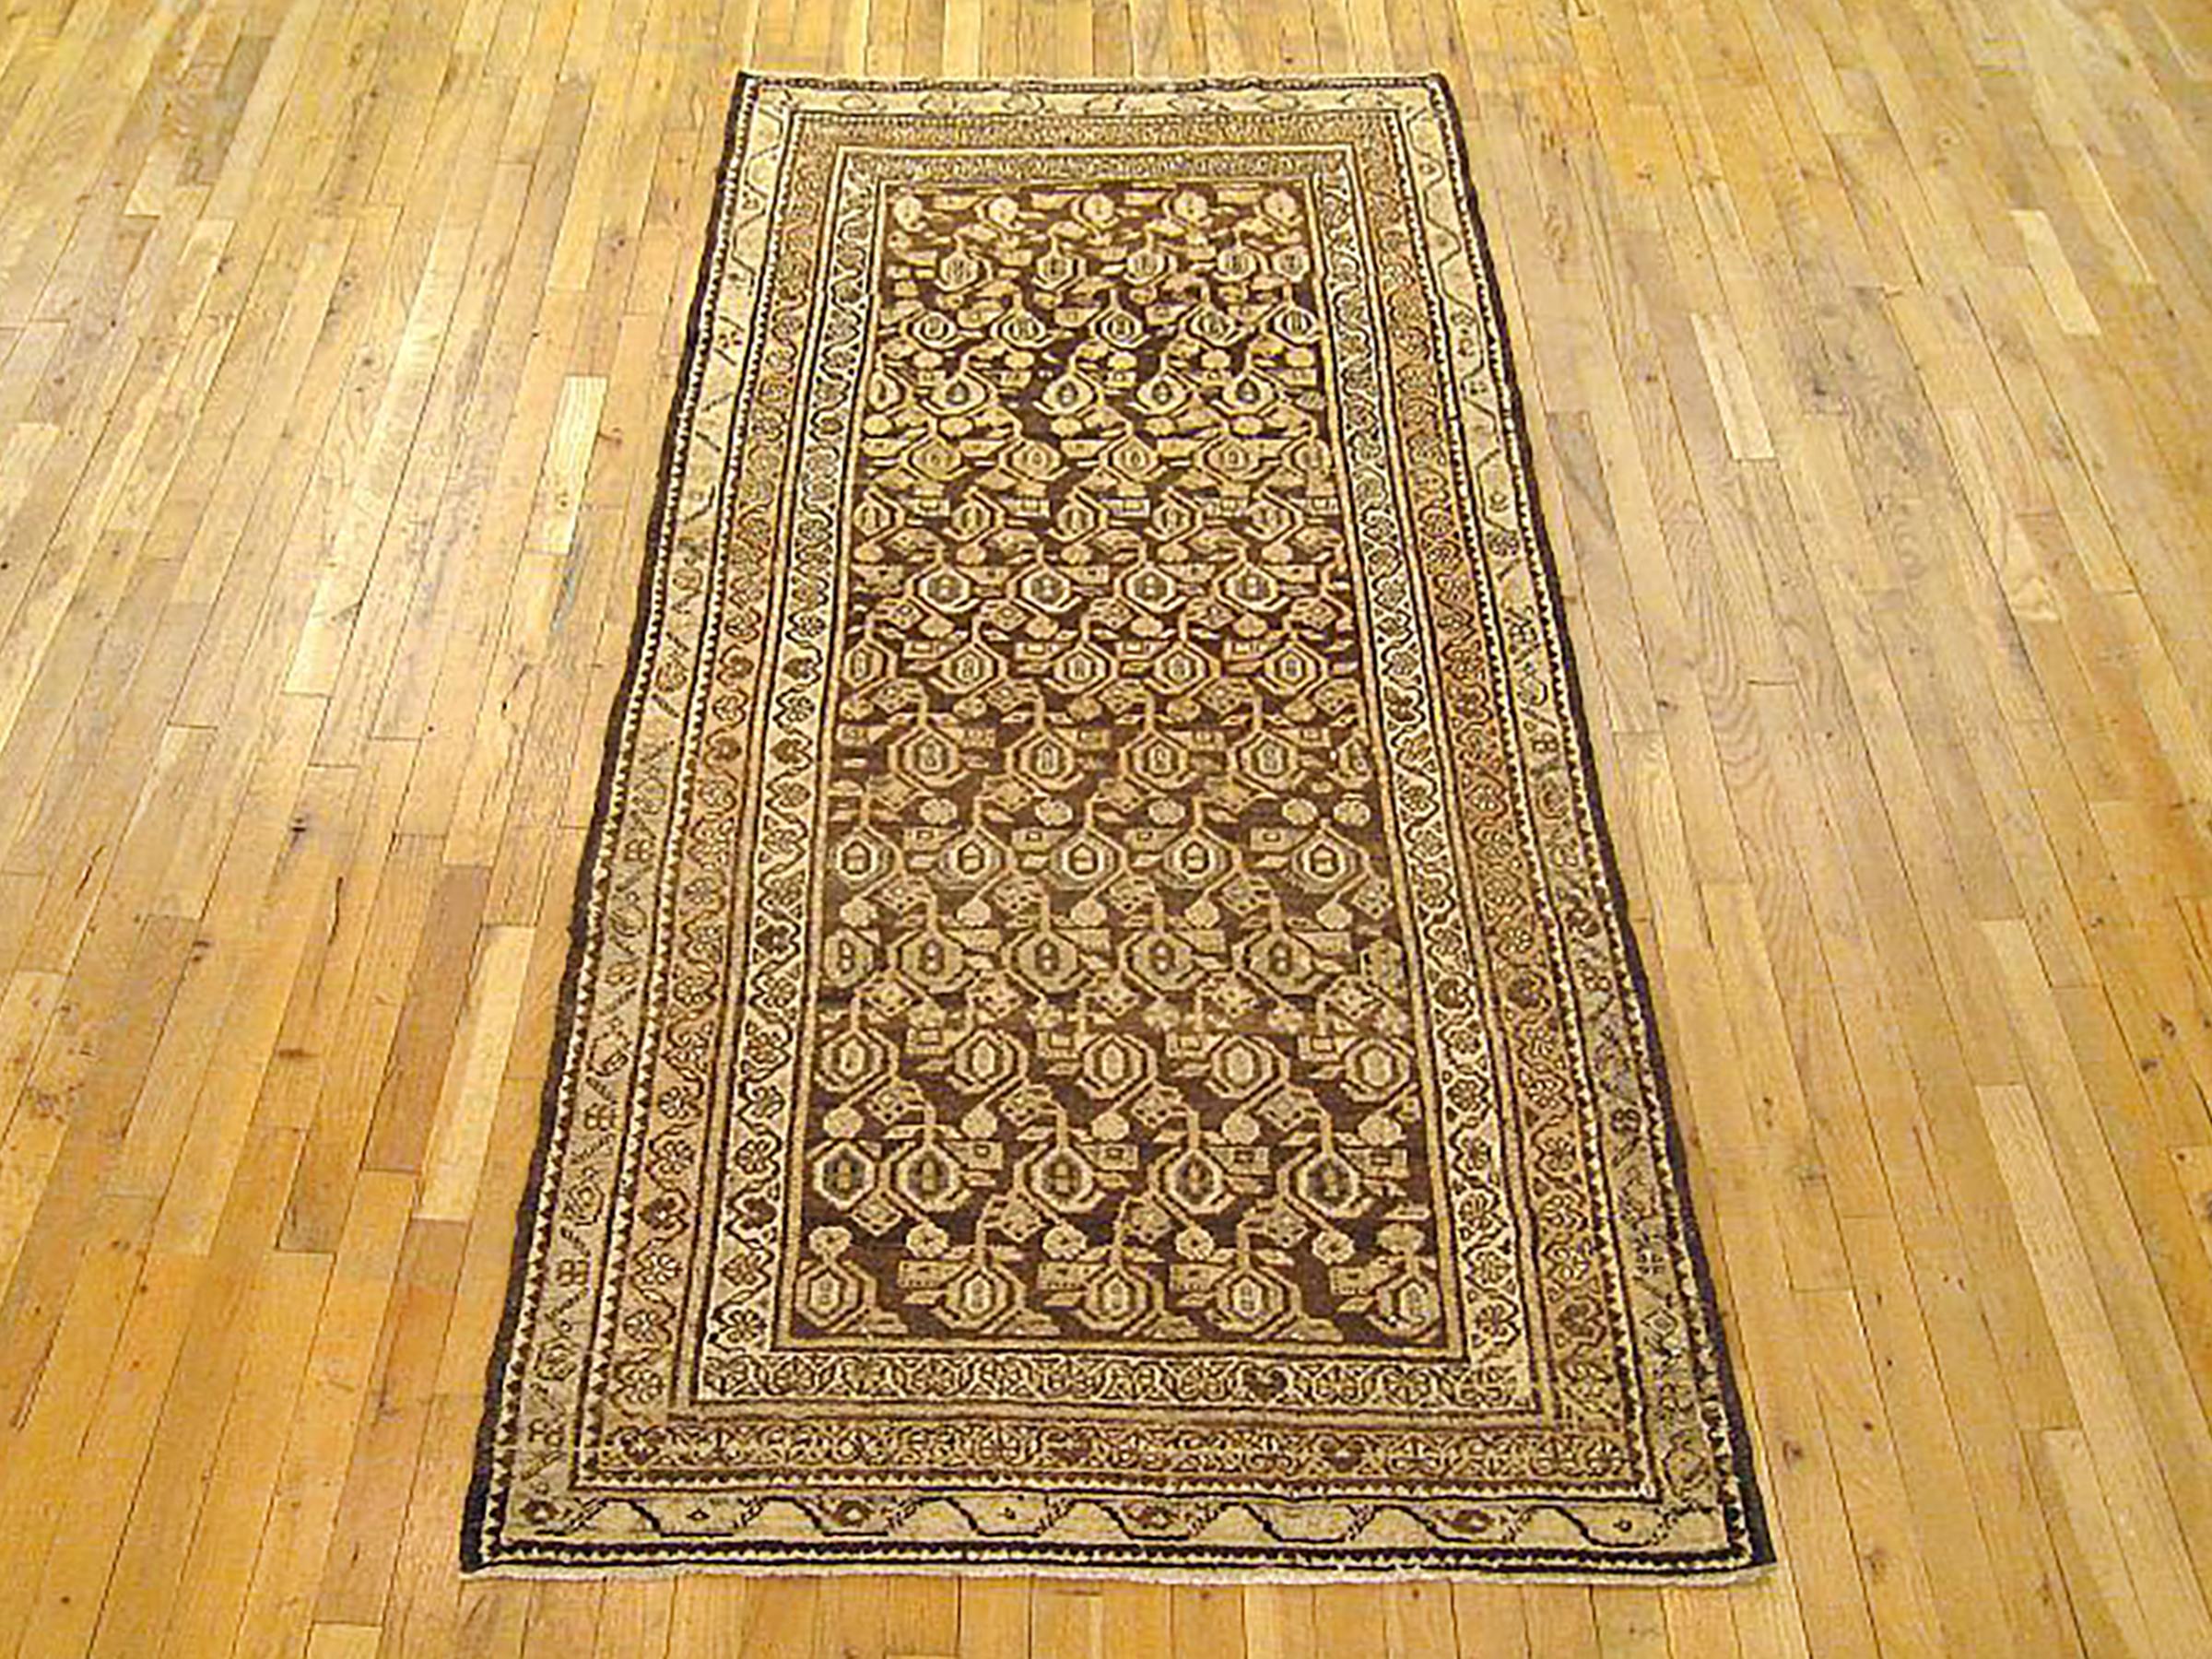 Antique Persian Hamadan Oriental Rug, Runner size

A vintage Persian Hamadan oriental rug in runner size, size 7'8